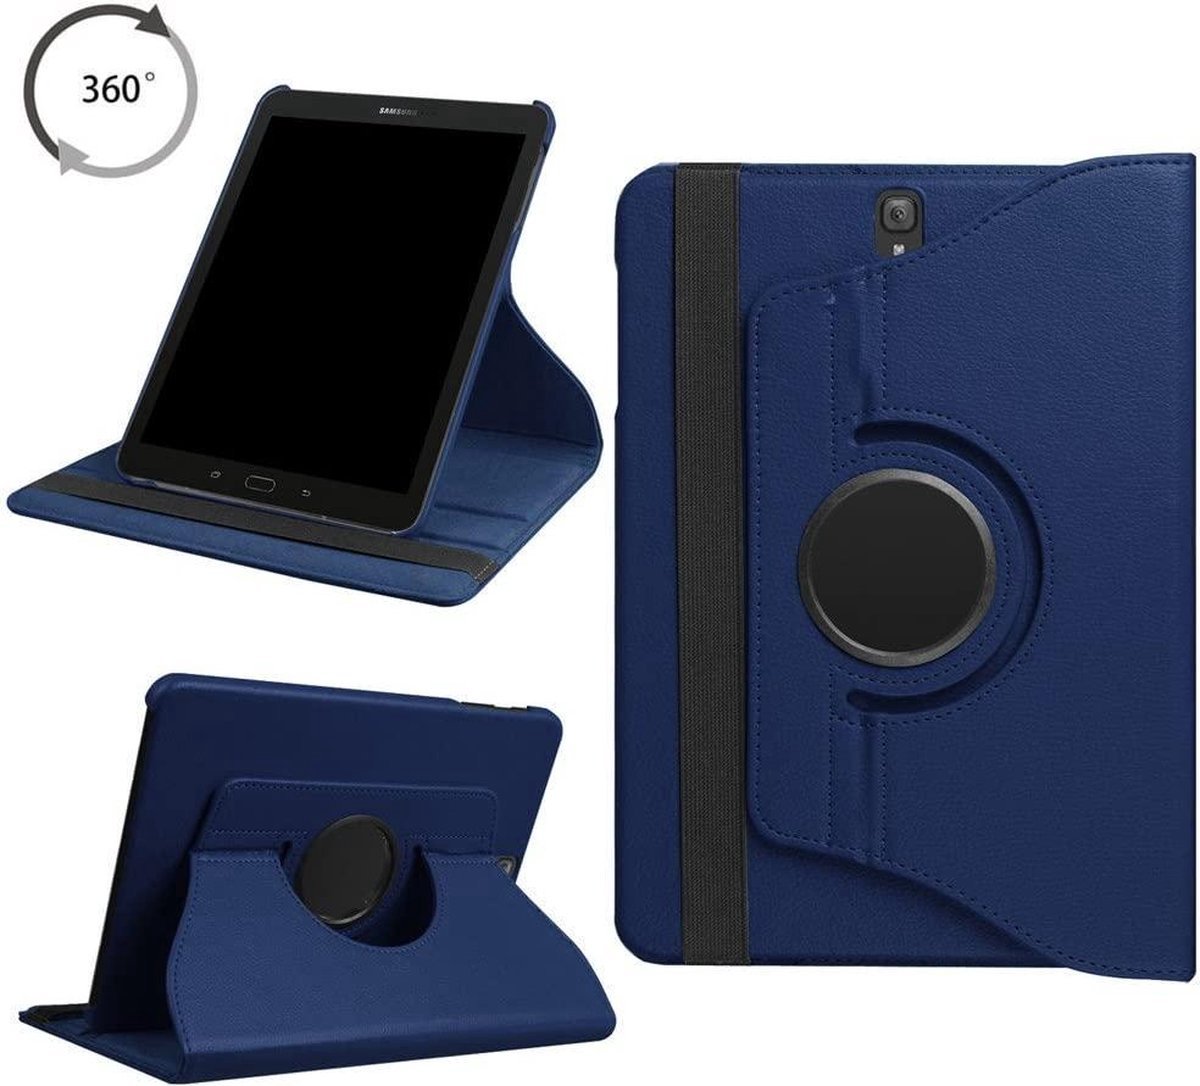 Draaibaar Hoesje - Rotation Tabletcase - Multi stand Case Geschikt voor: Samsung Galaxy Tab S2 8.0 Inch T710 / T715 - Donkerblauw